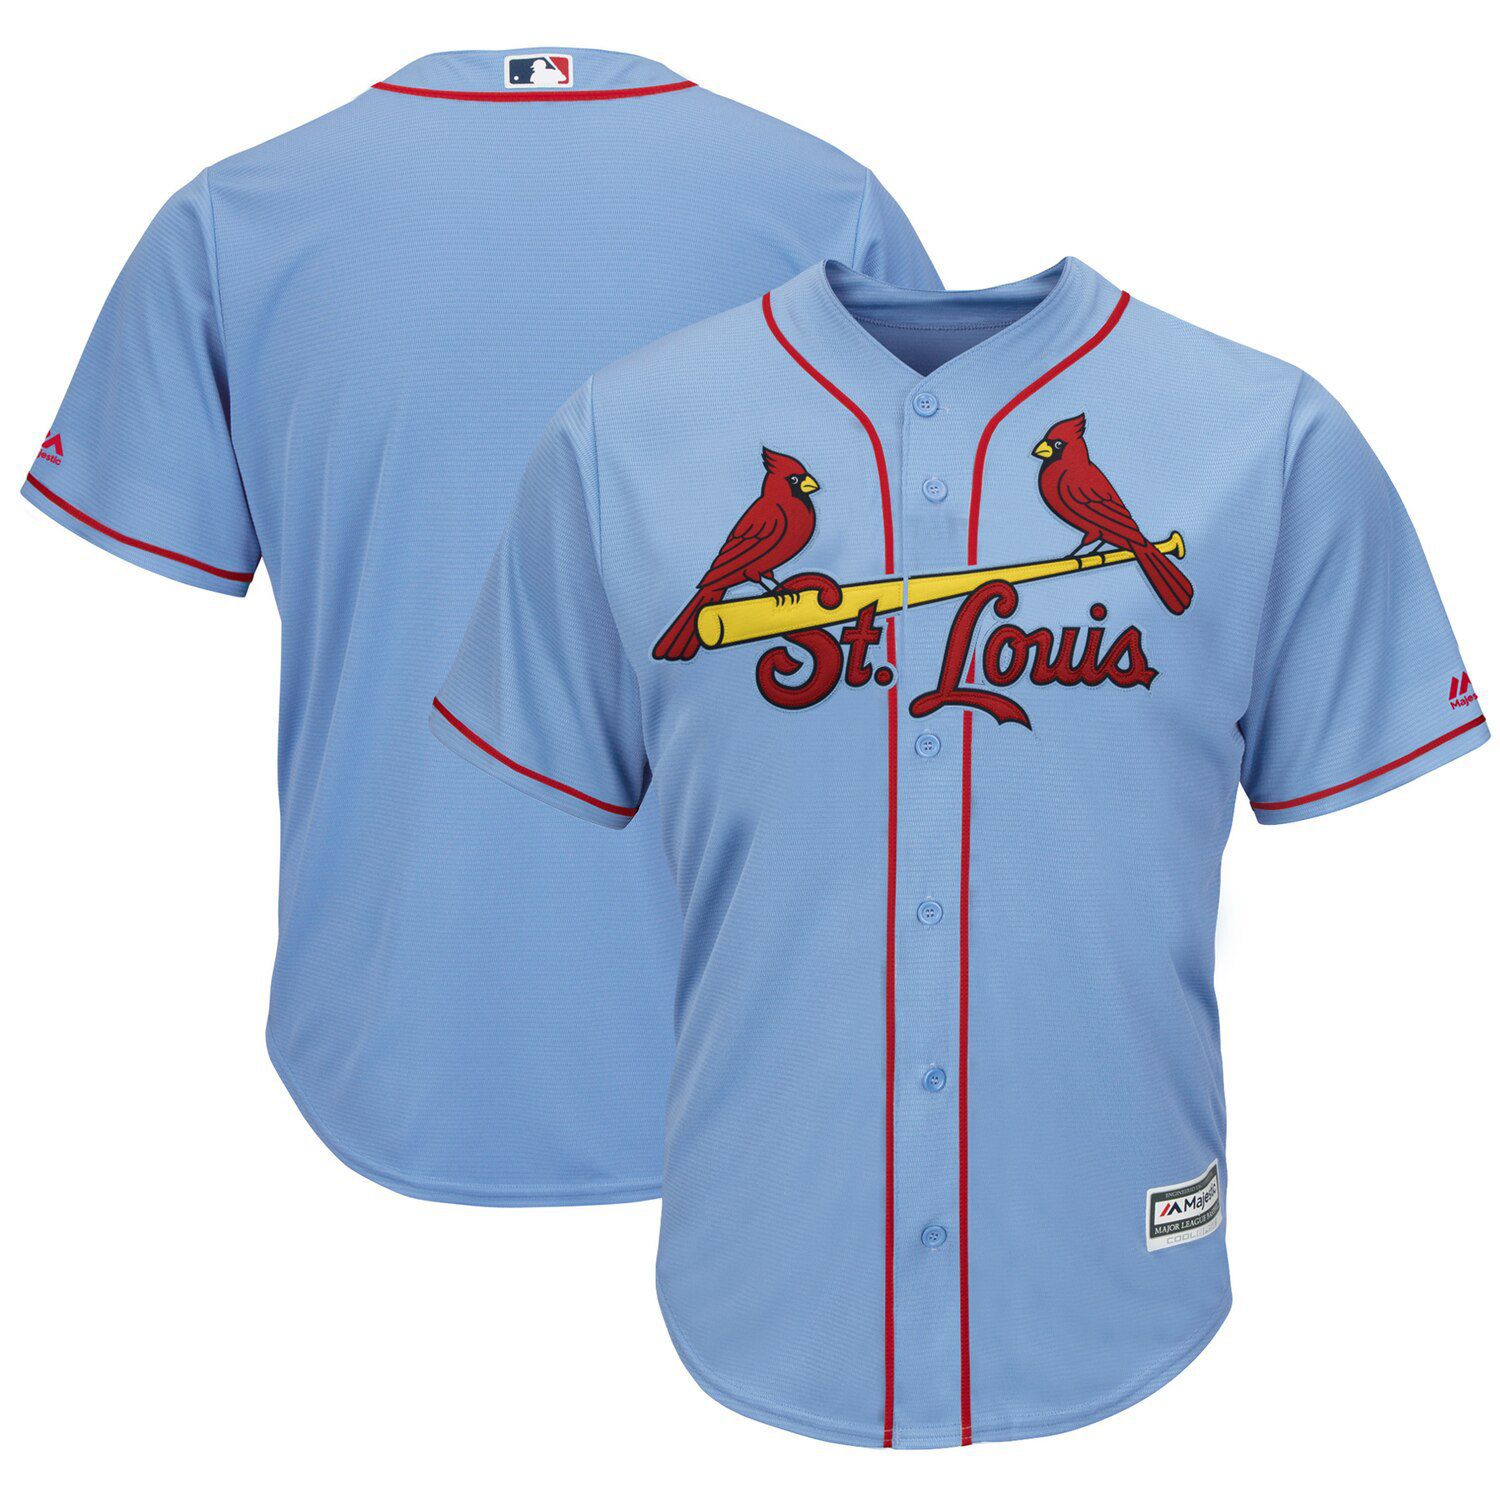 st louis cardinals authentic alternate jersey